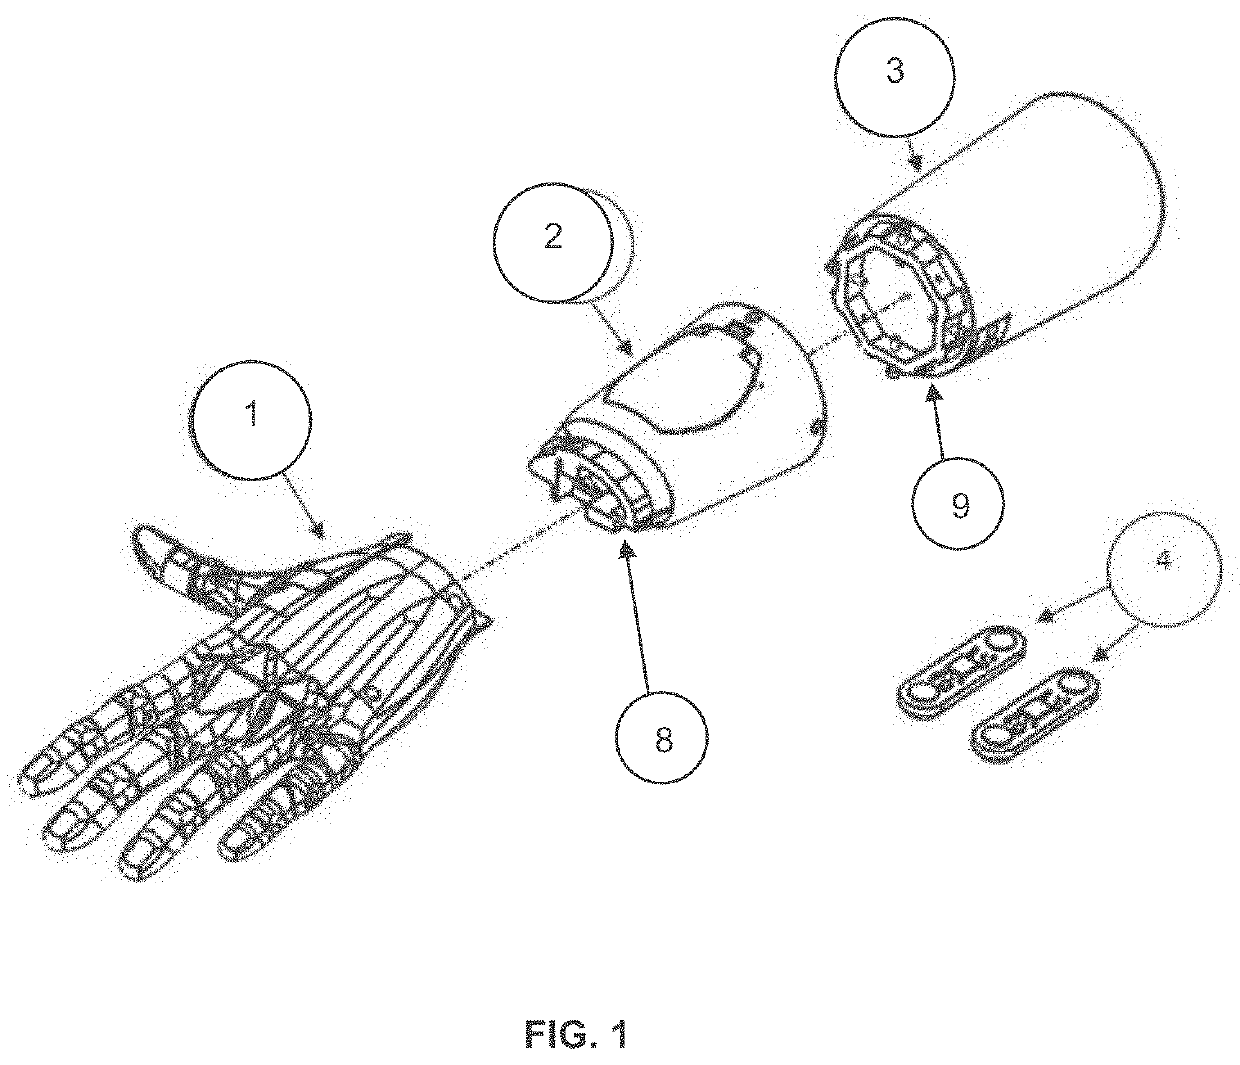 Modular prosthetic arm system